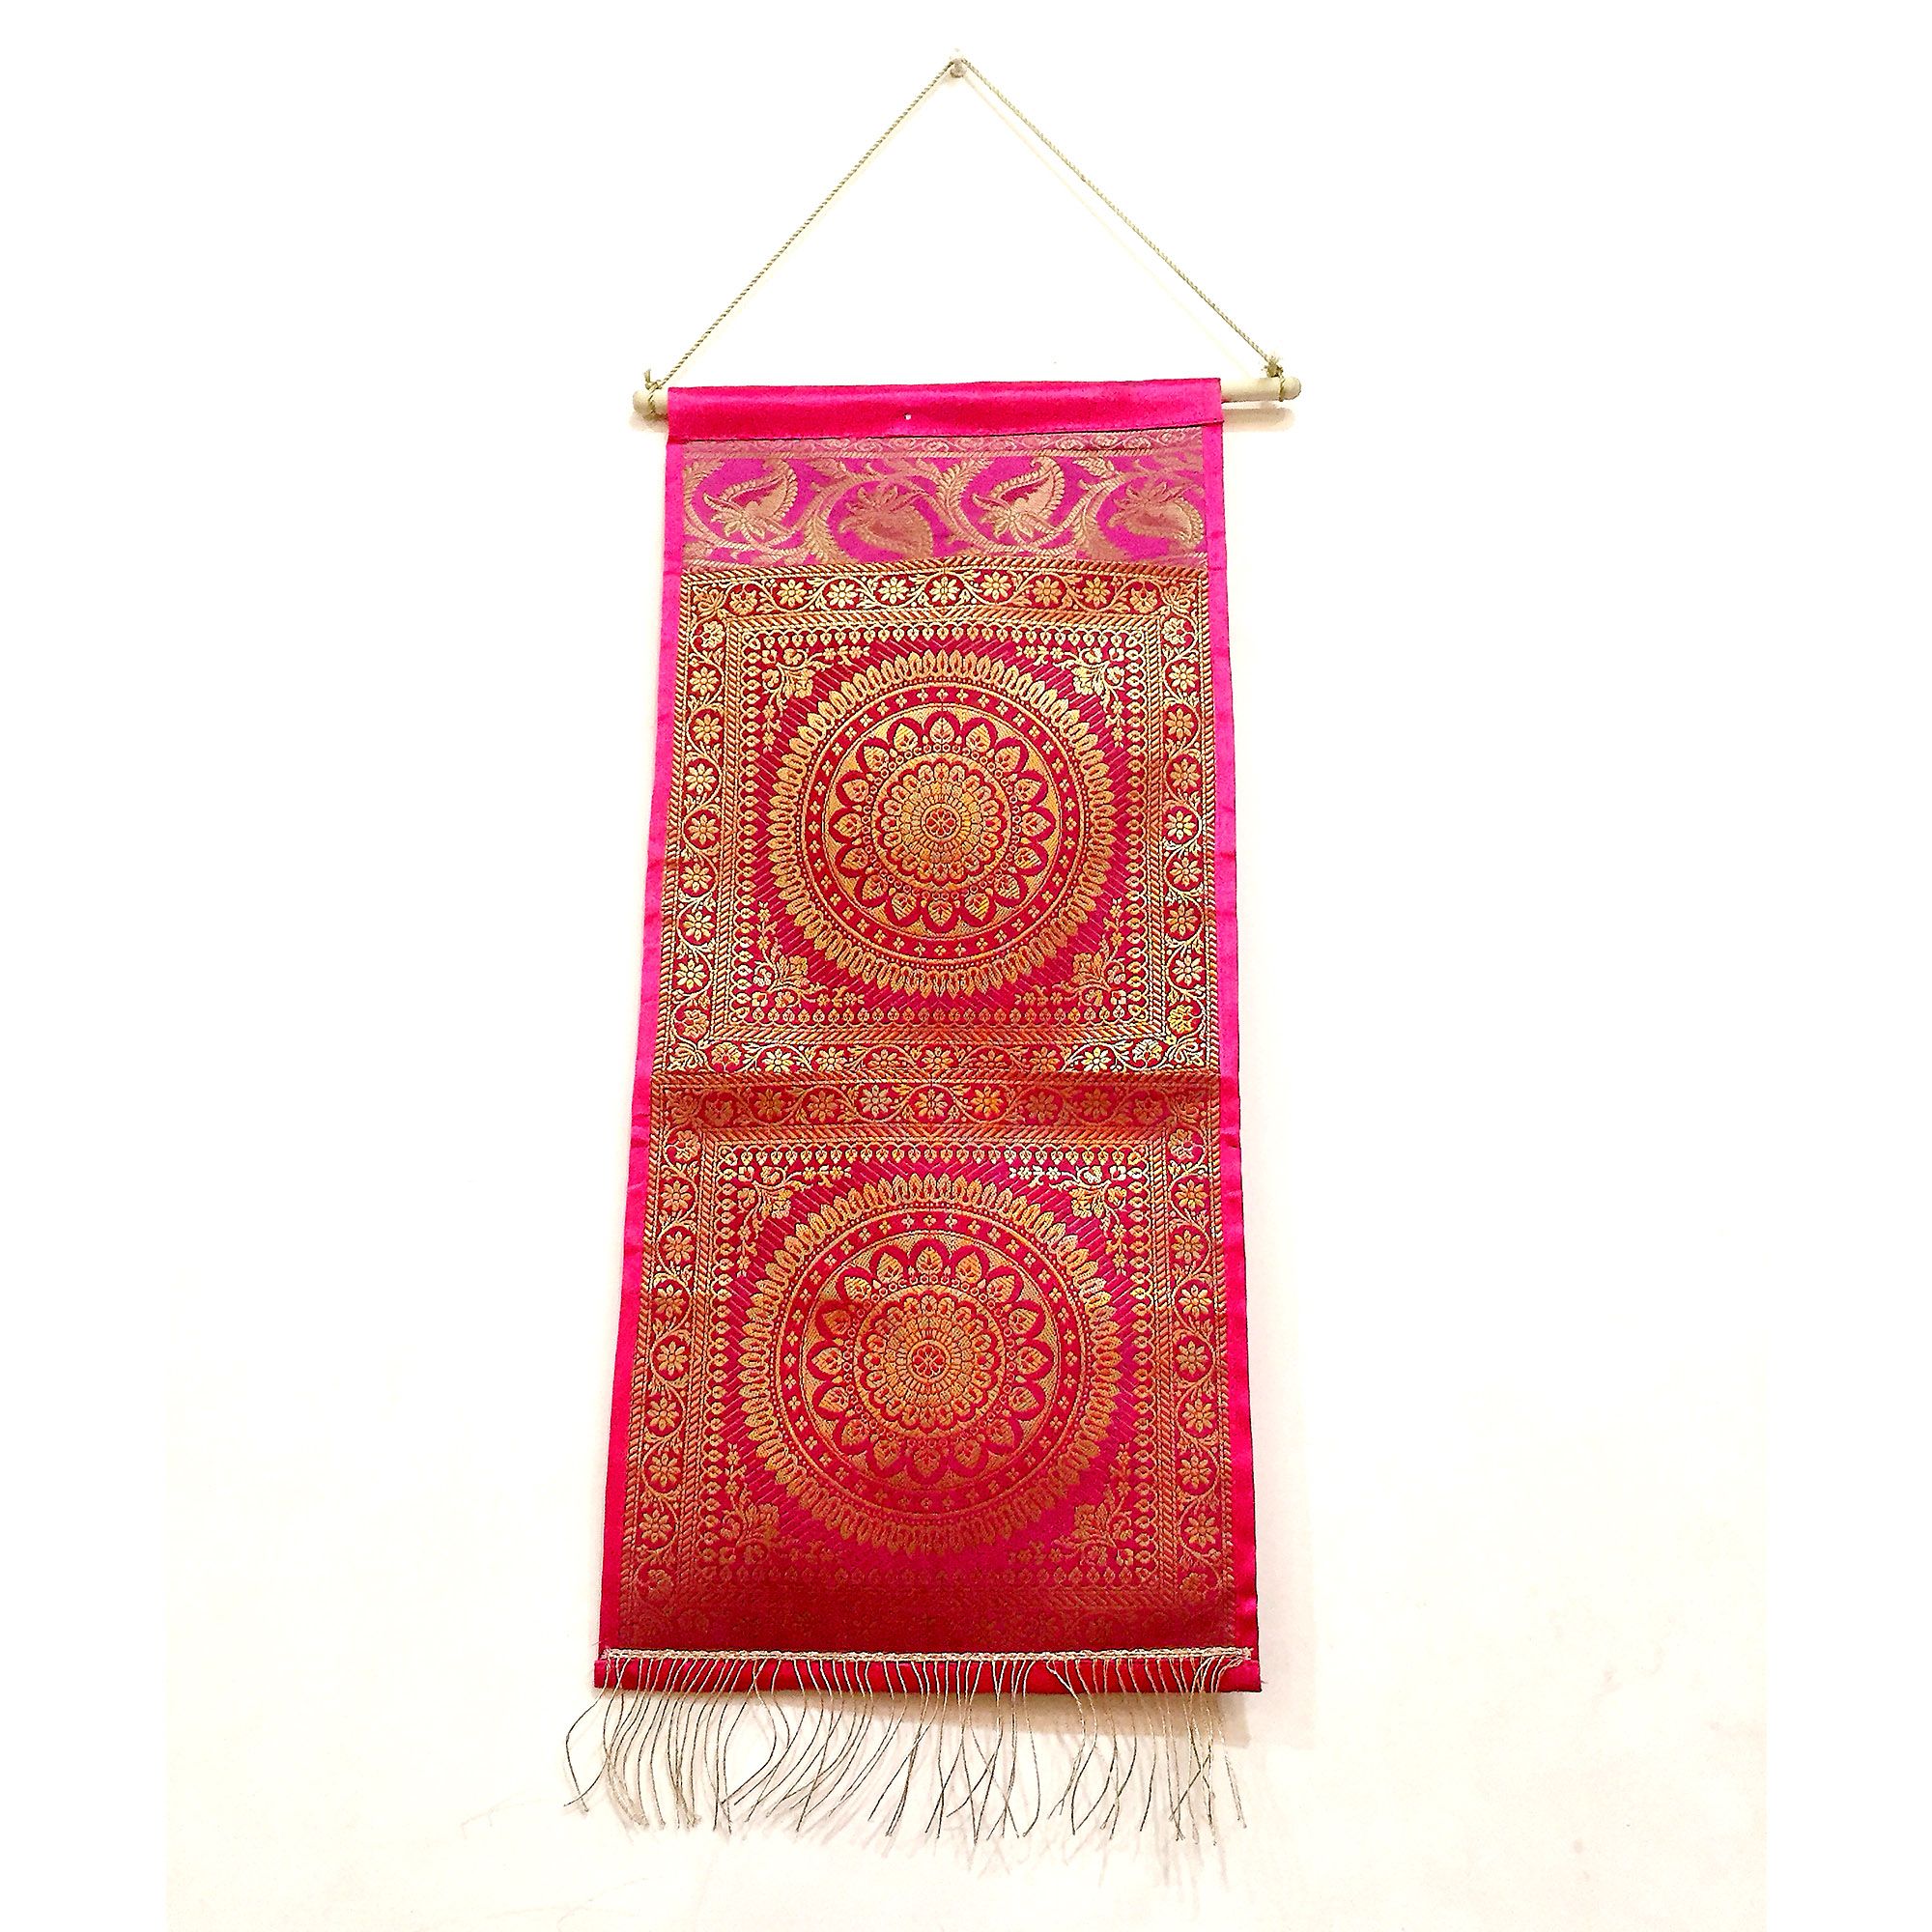 Traditional Brocade Work Rangoli Pattern Design Silk Wall Hanging in Pink